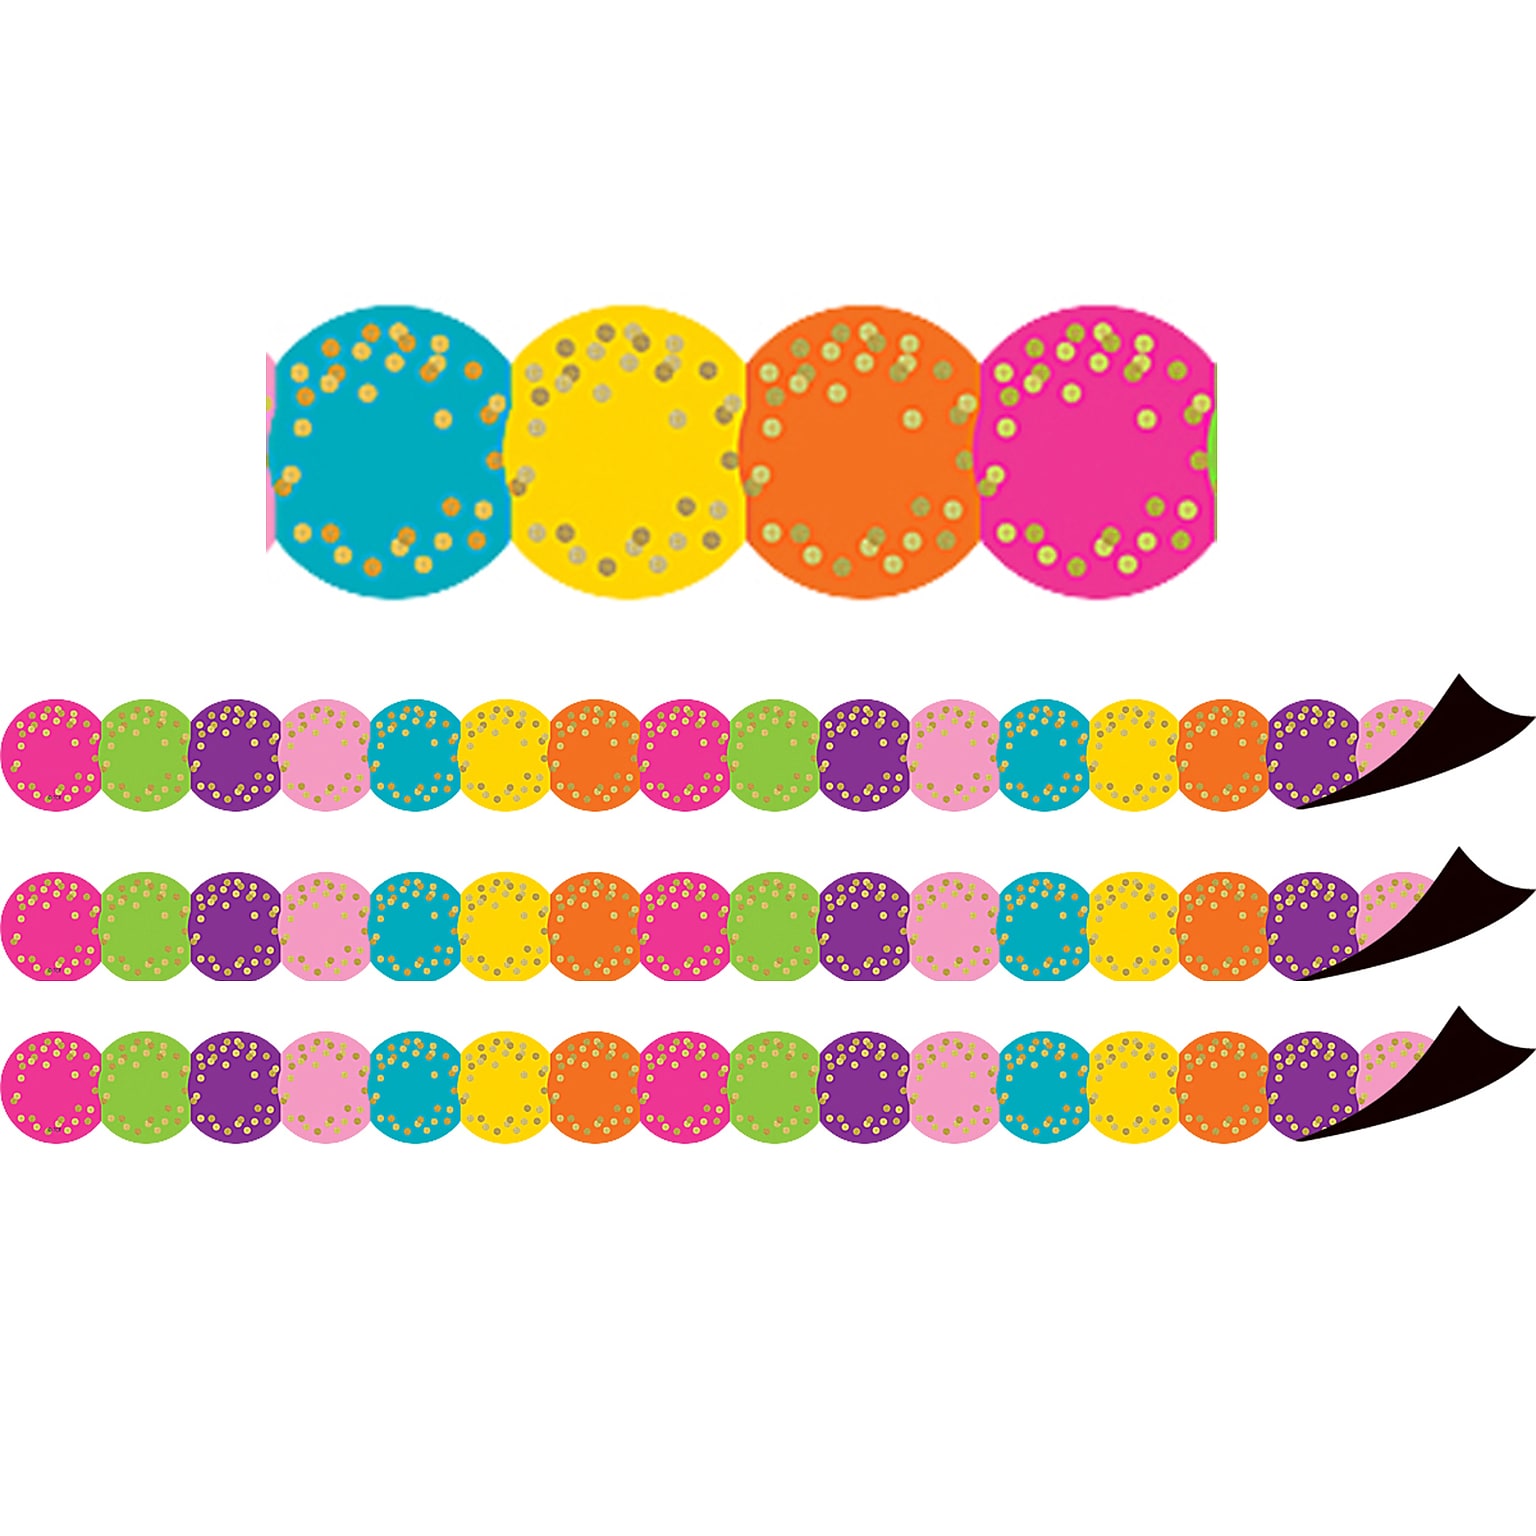 Teacher Created Resources® Confetti Circles Die-Cut Magnetic Border, 24 Feet Per Pack, 3 Packs (TCR77390-3)